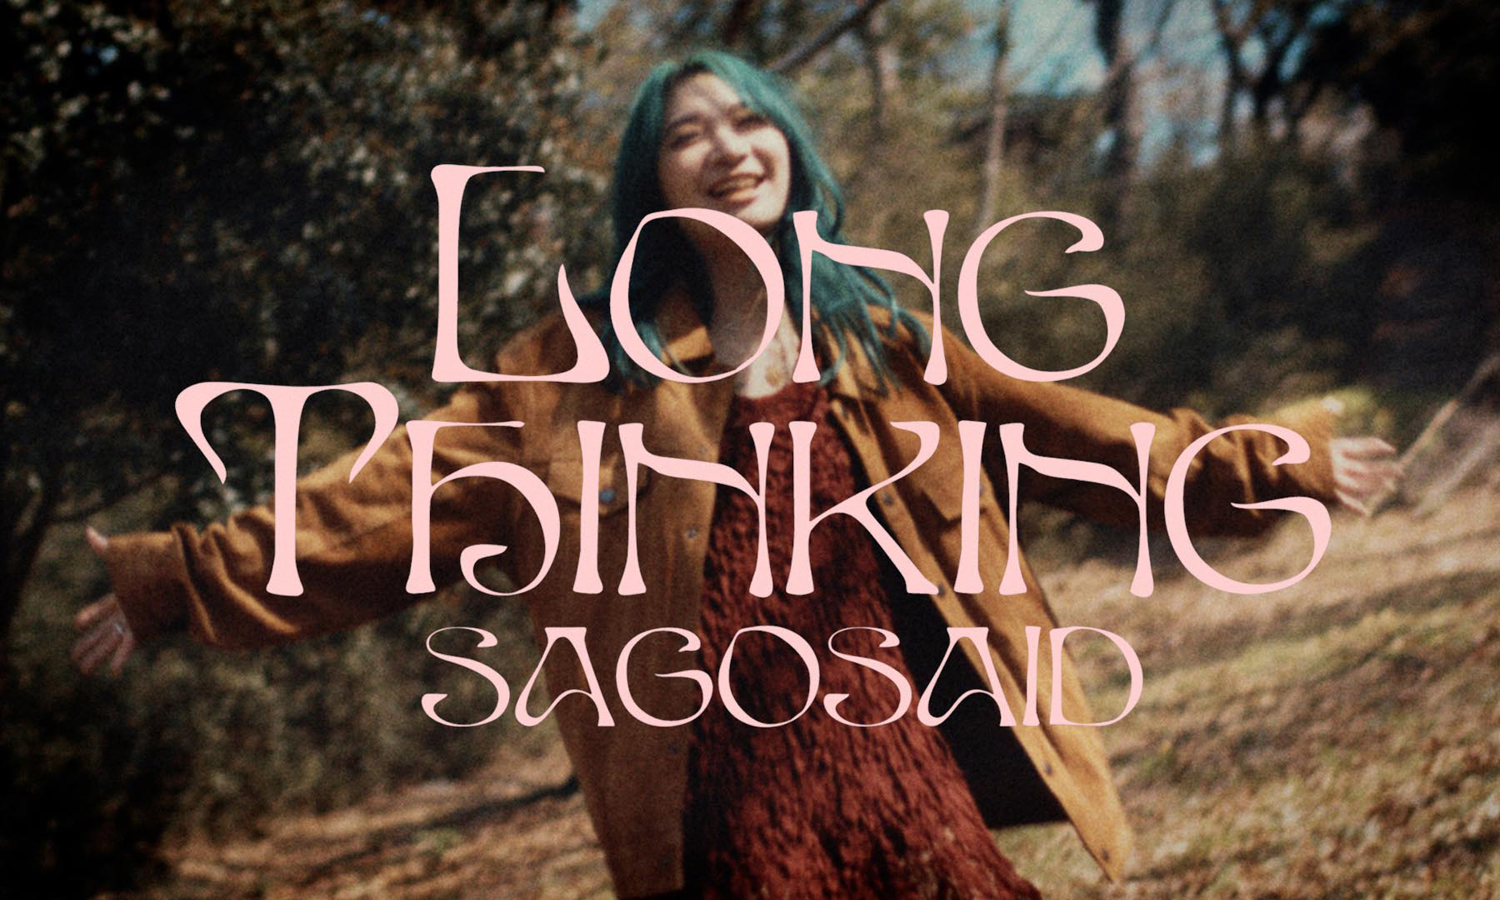 SAGOSAID 'Long thinking' MV